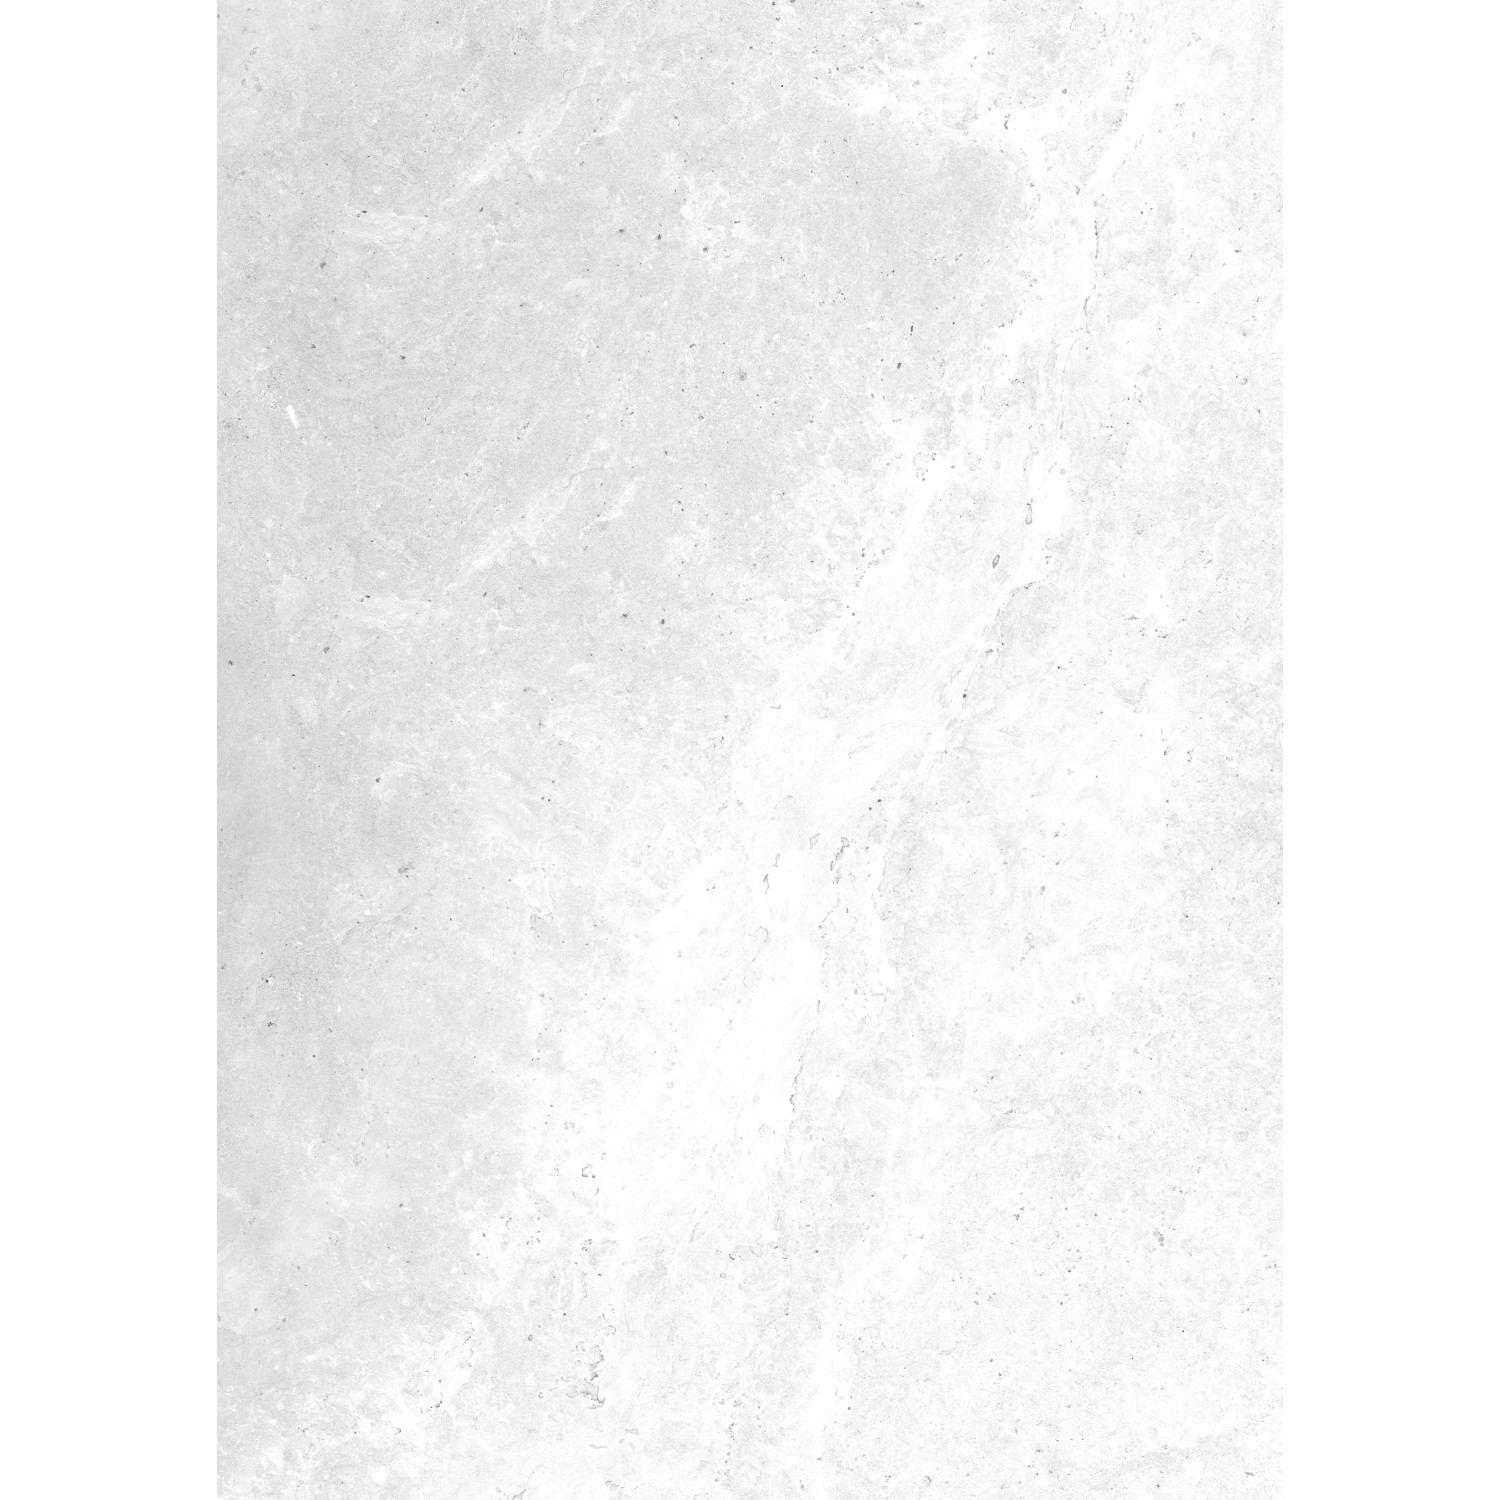 Hüppe Duschrückwand EasyStyle 150 cm x 255 cm Barcelona Weiß von Hüppe